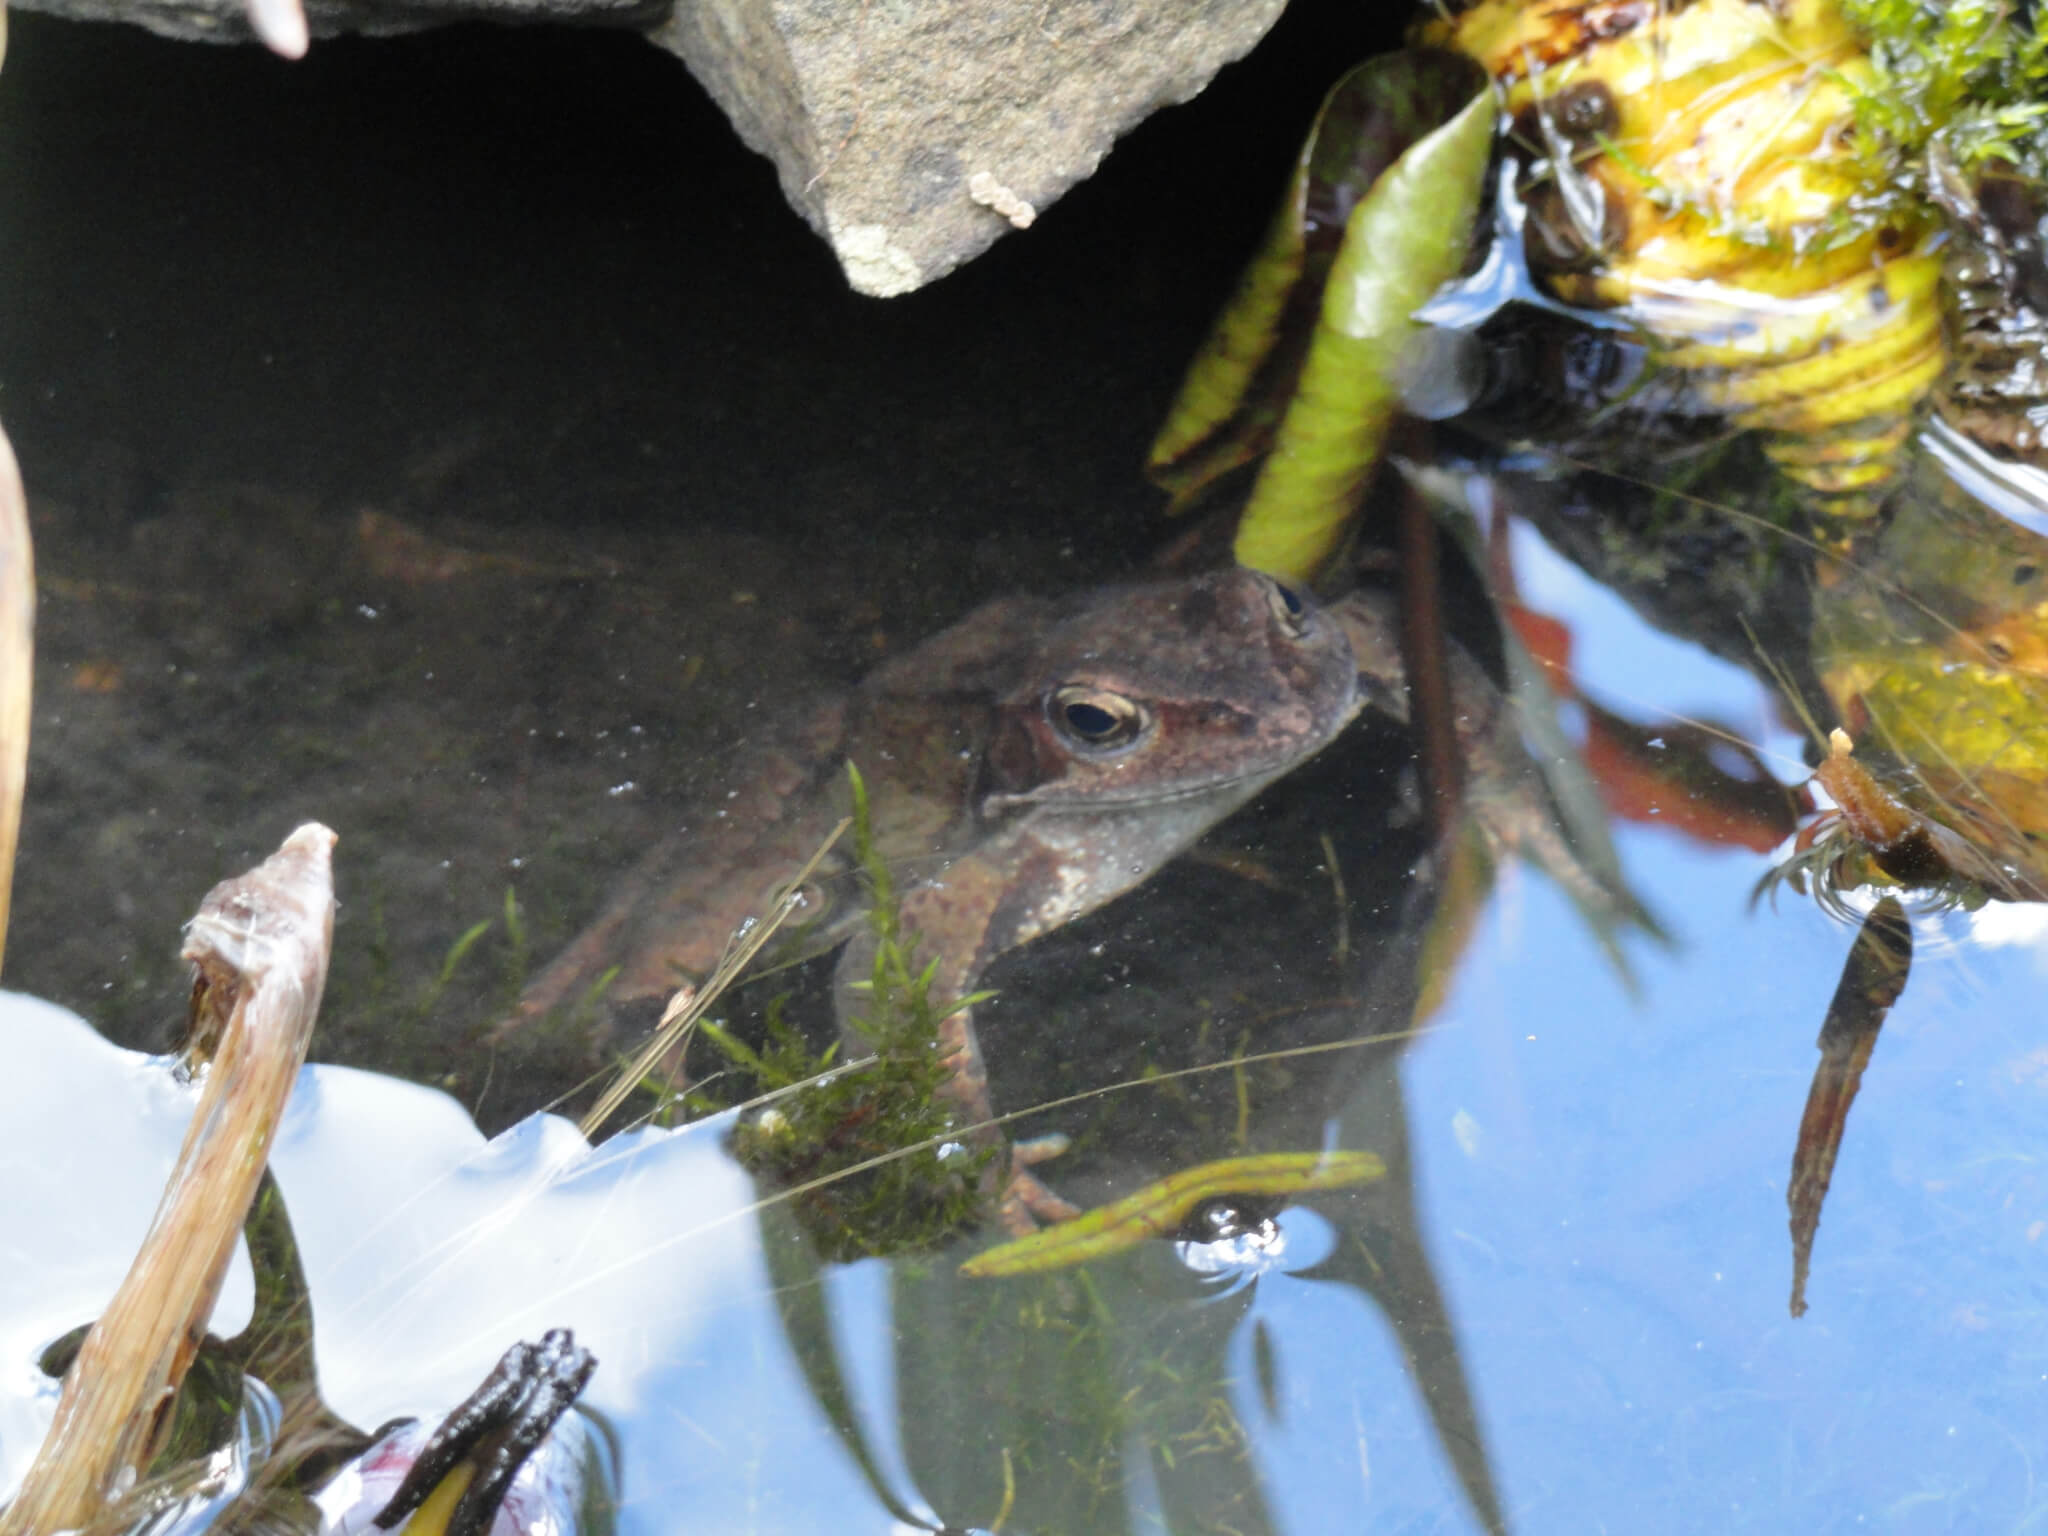 Adult Frog in Pond